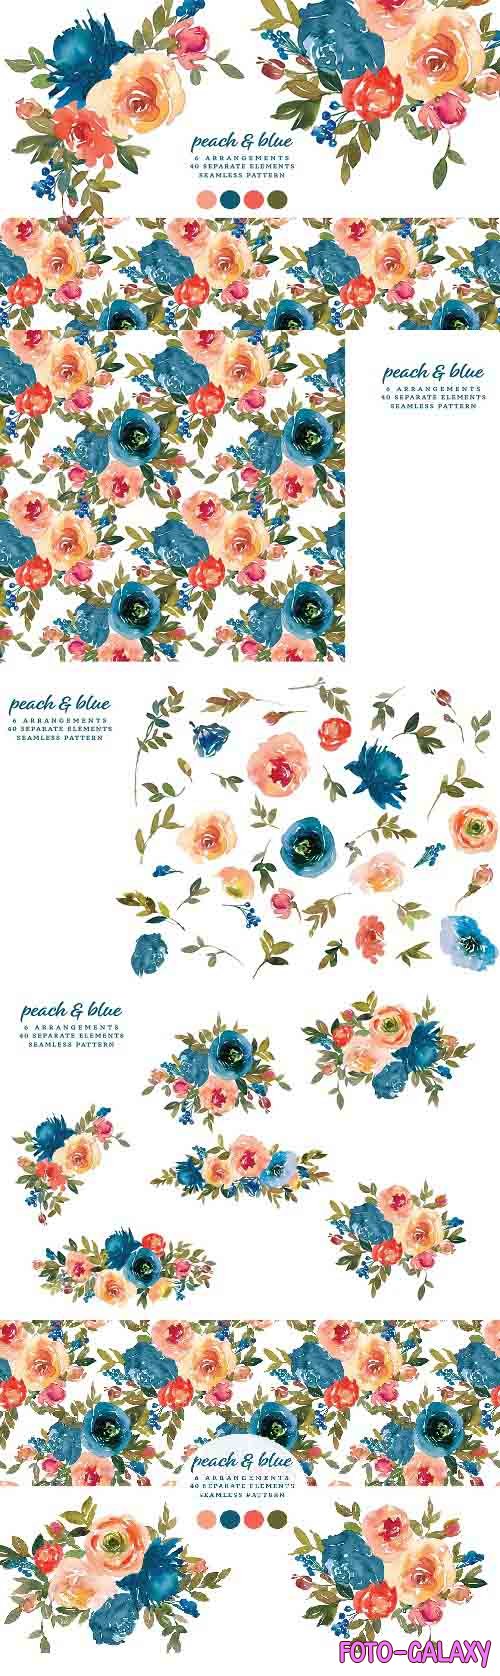 Watercolor Peach & Blue Clipart - 6157004